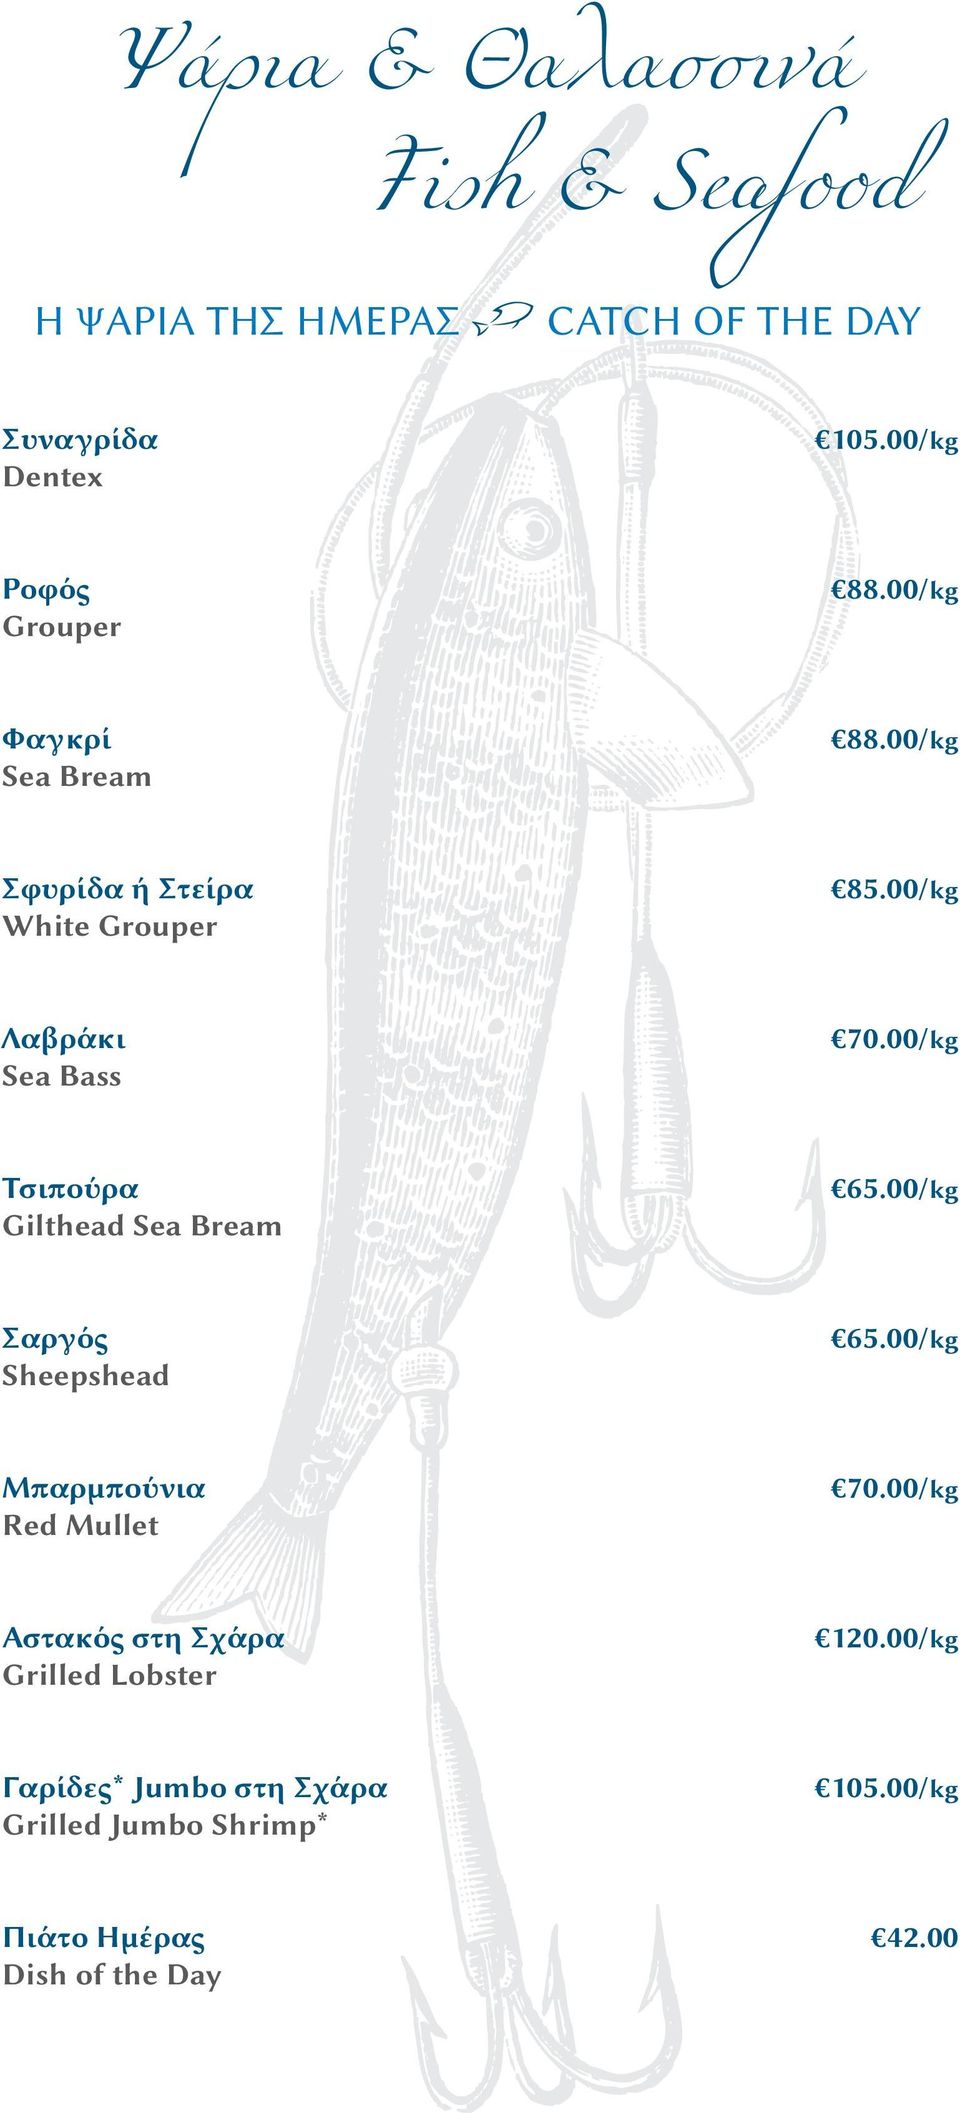 00/kg Λαβράκι Sea Bass 70.00/kg Τσιπούρα Gilthead Sea Bream 65.00/kg Σαργός Sheepshead 65.